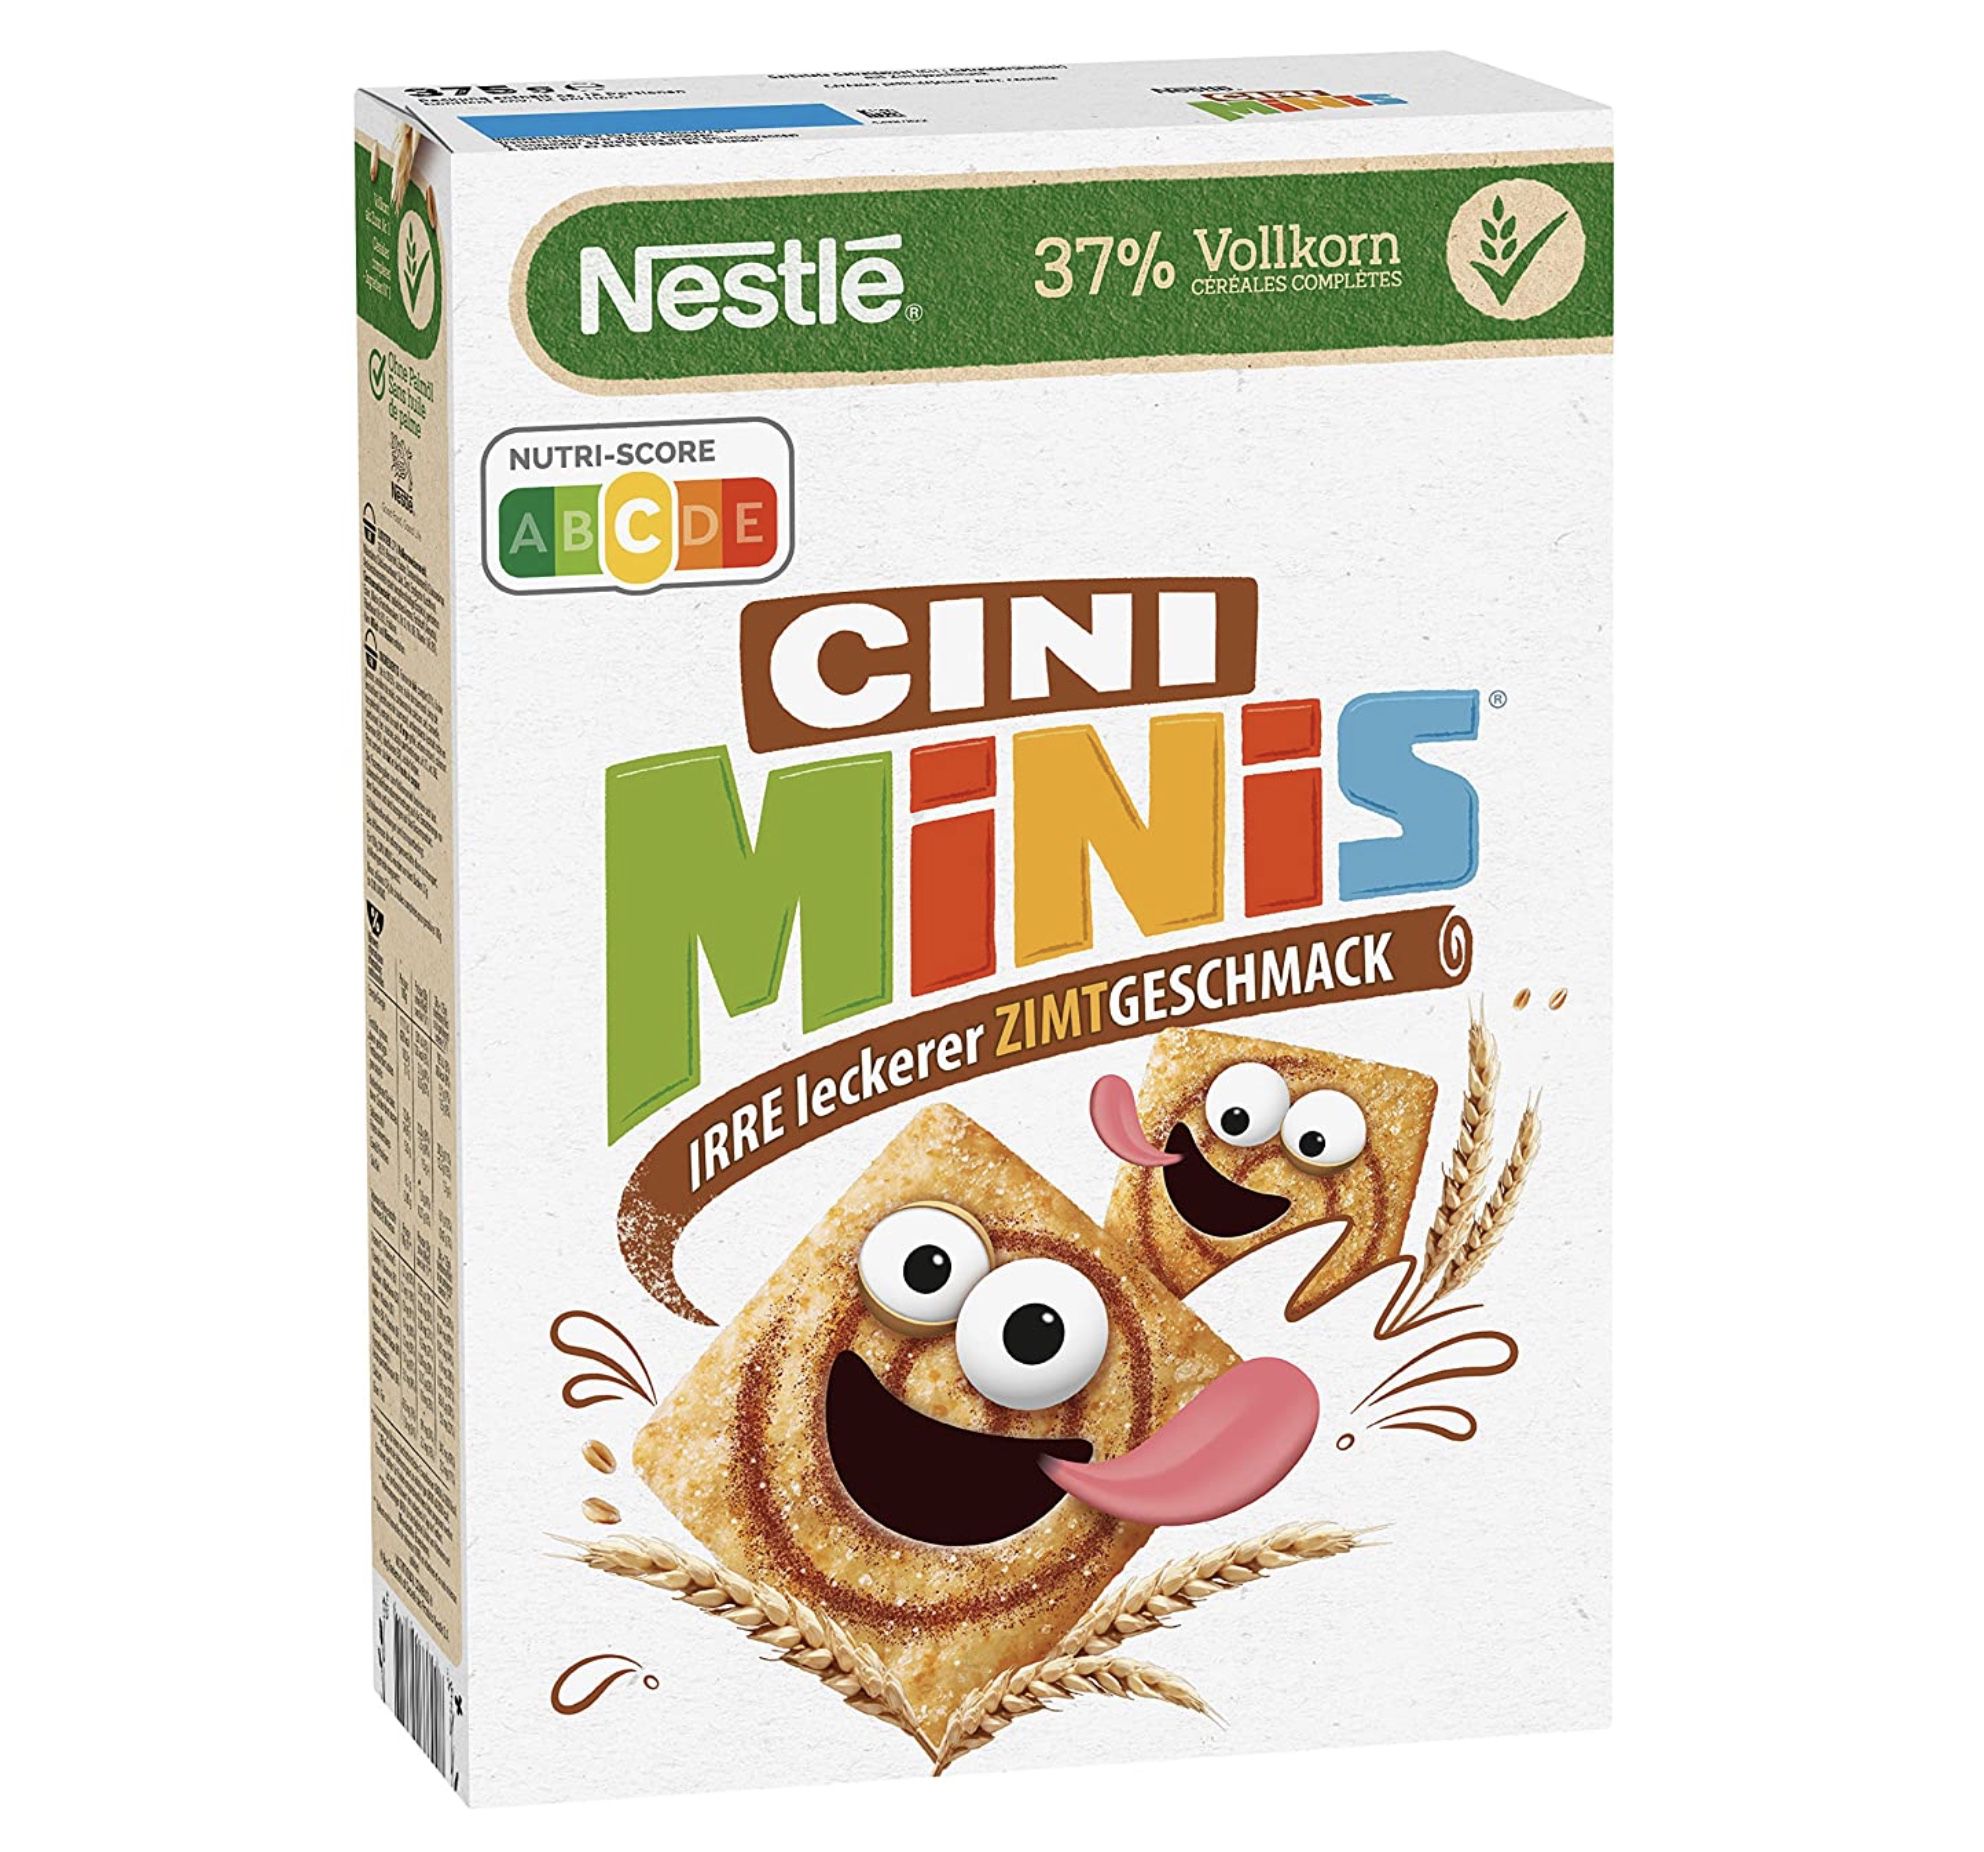 7x Nestlé Cini Minis je 375g ab 13,98€ (statt 21€) &#8211; Sparabo